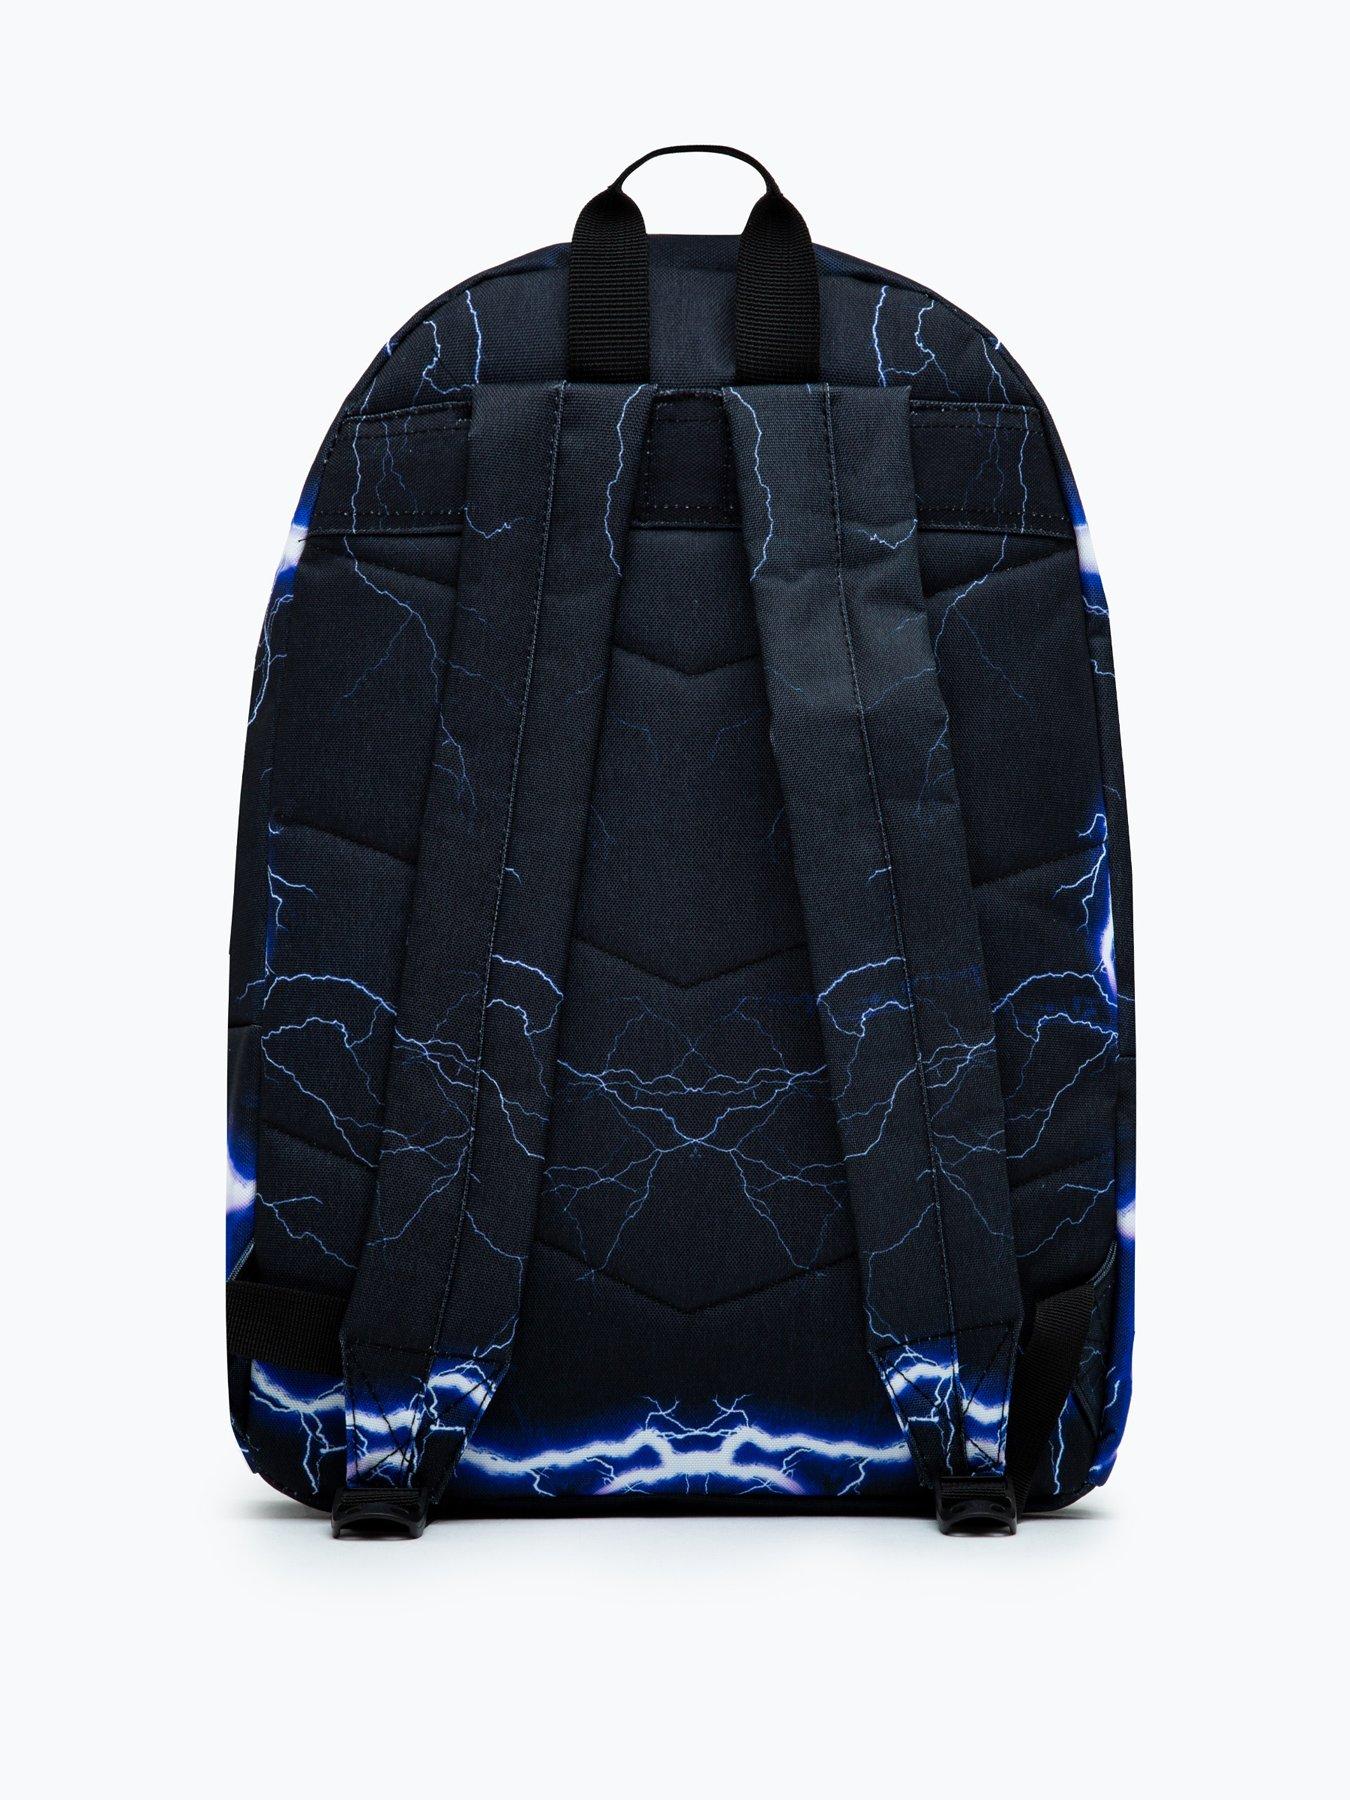  Unisex Lightning Crest Backpack - Black